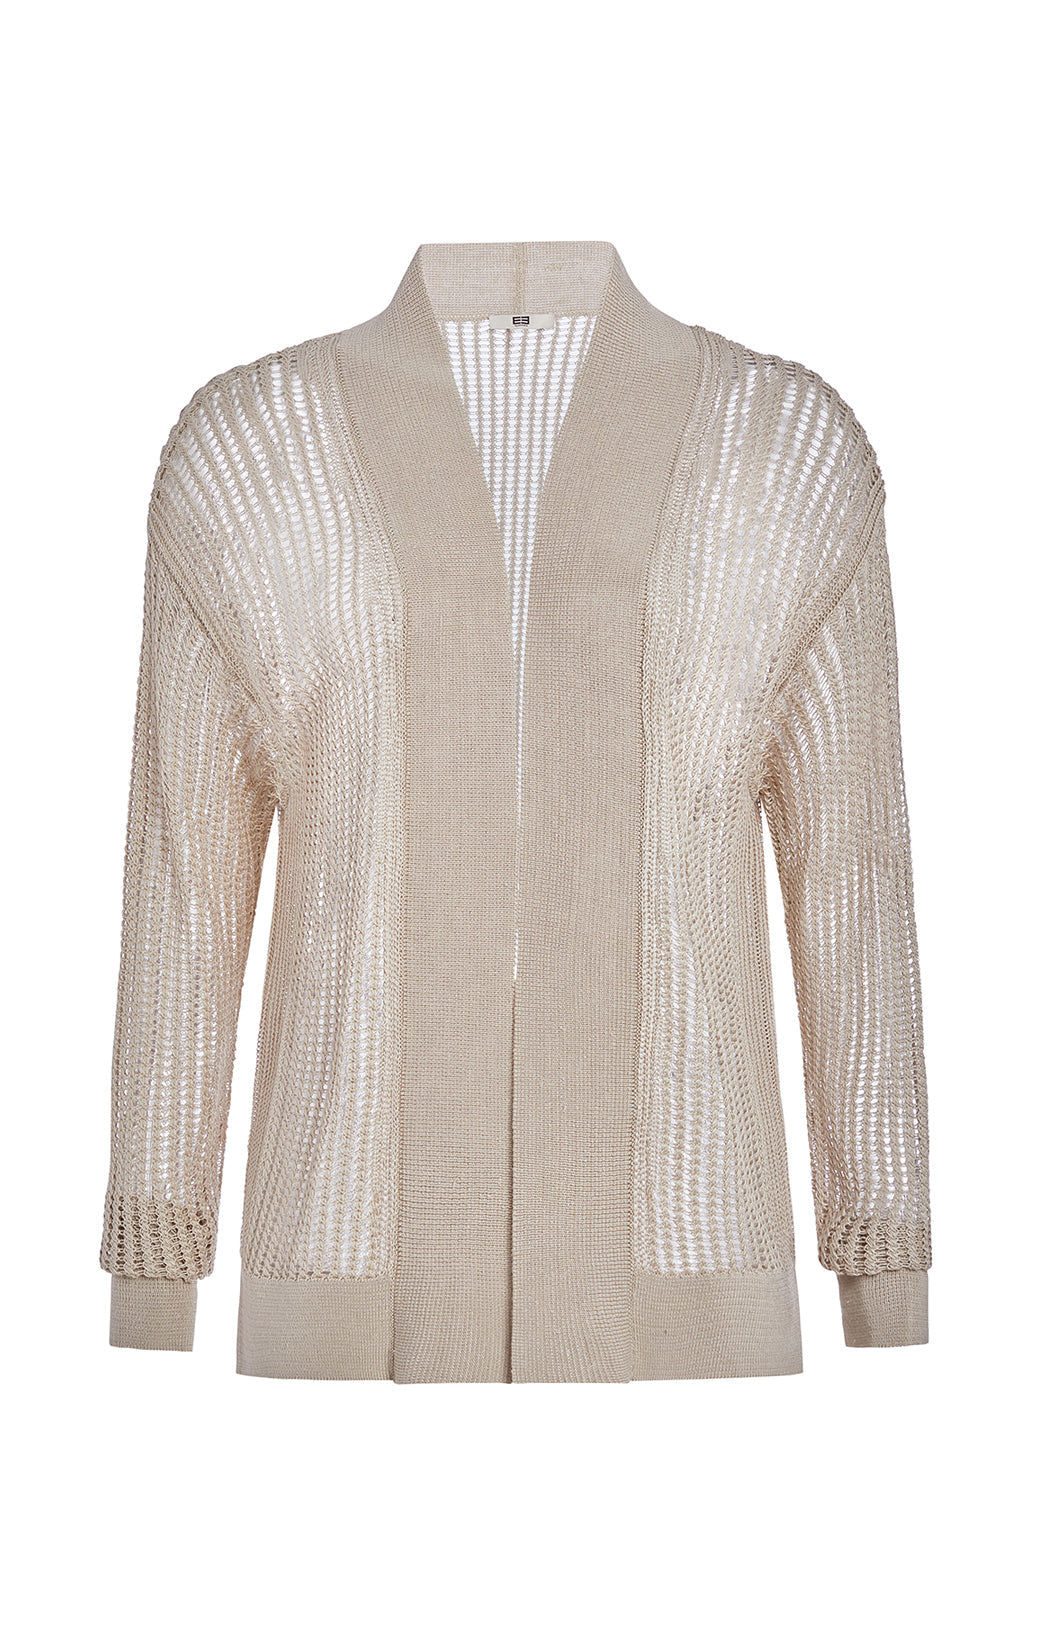 Tajine - Linen-Blend Knit Cardigan - Product Image